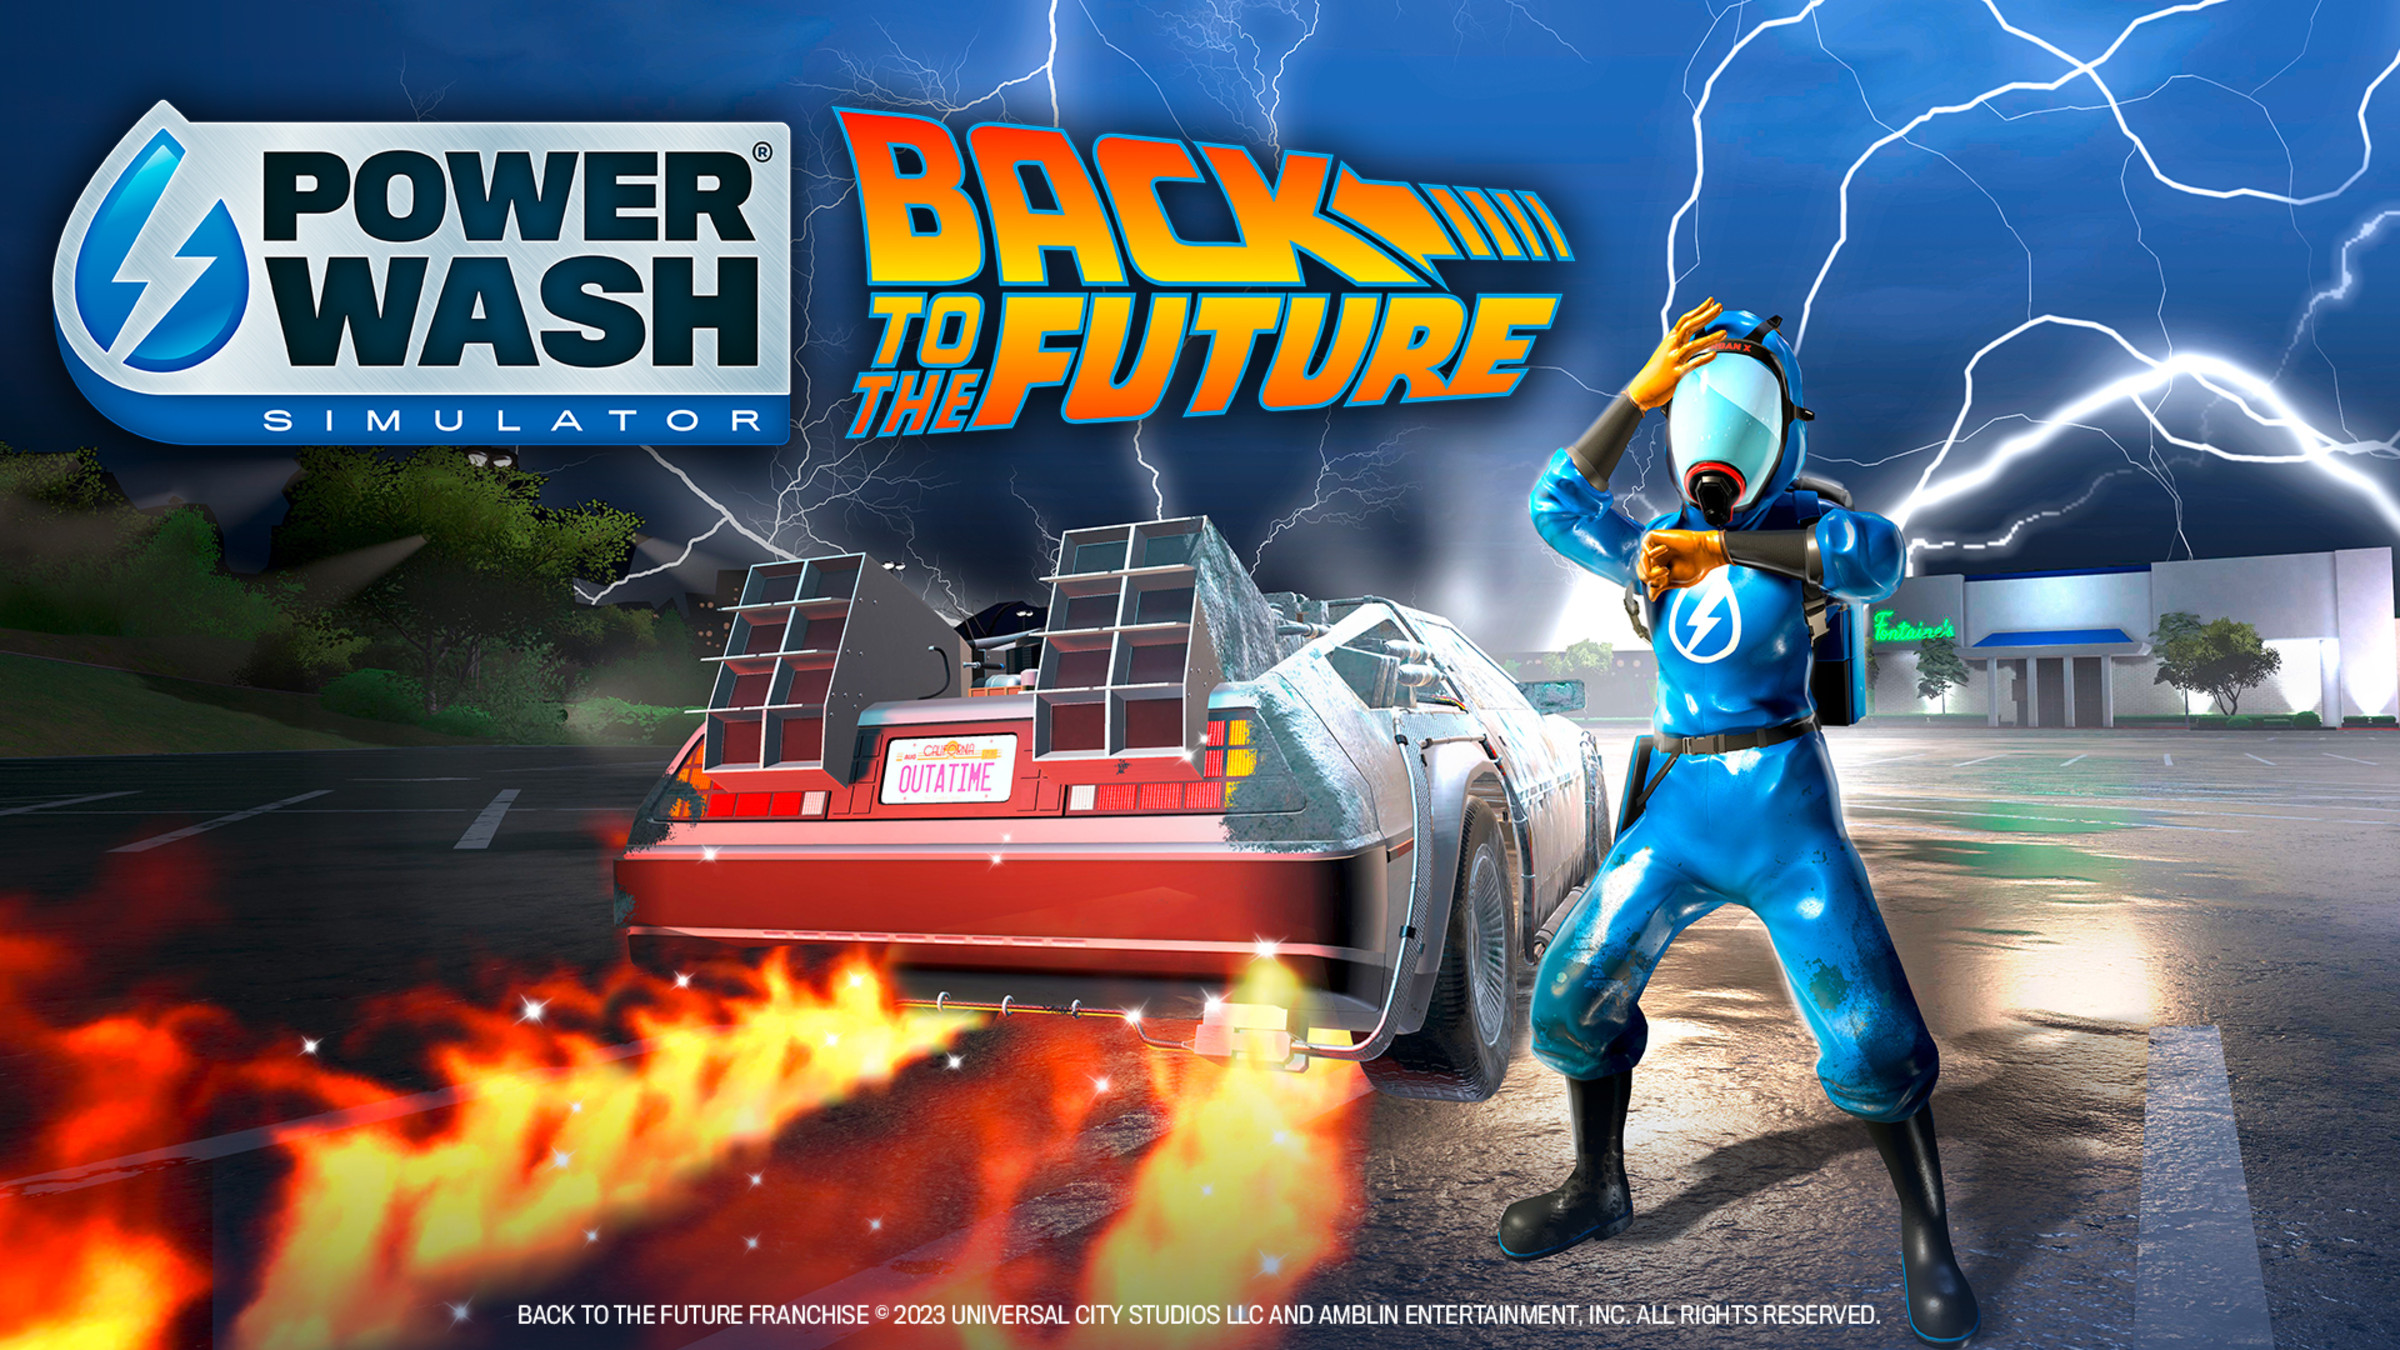 PowerWash Simulator: Back to the Future Box Shot for PlayStation 4